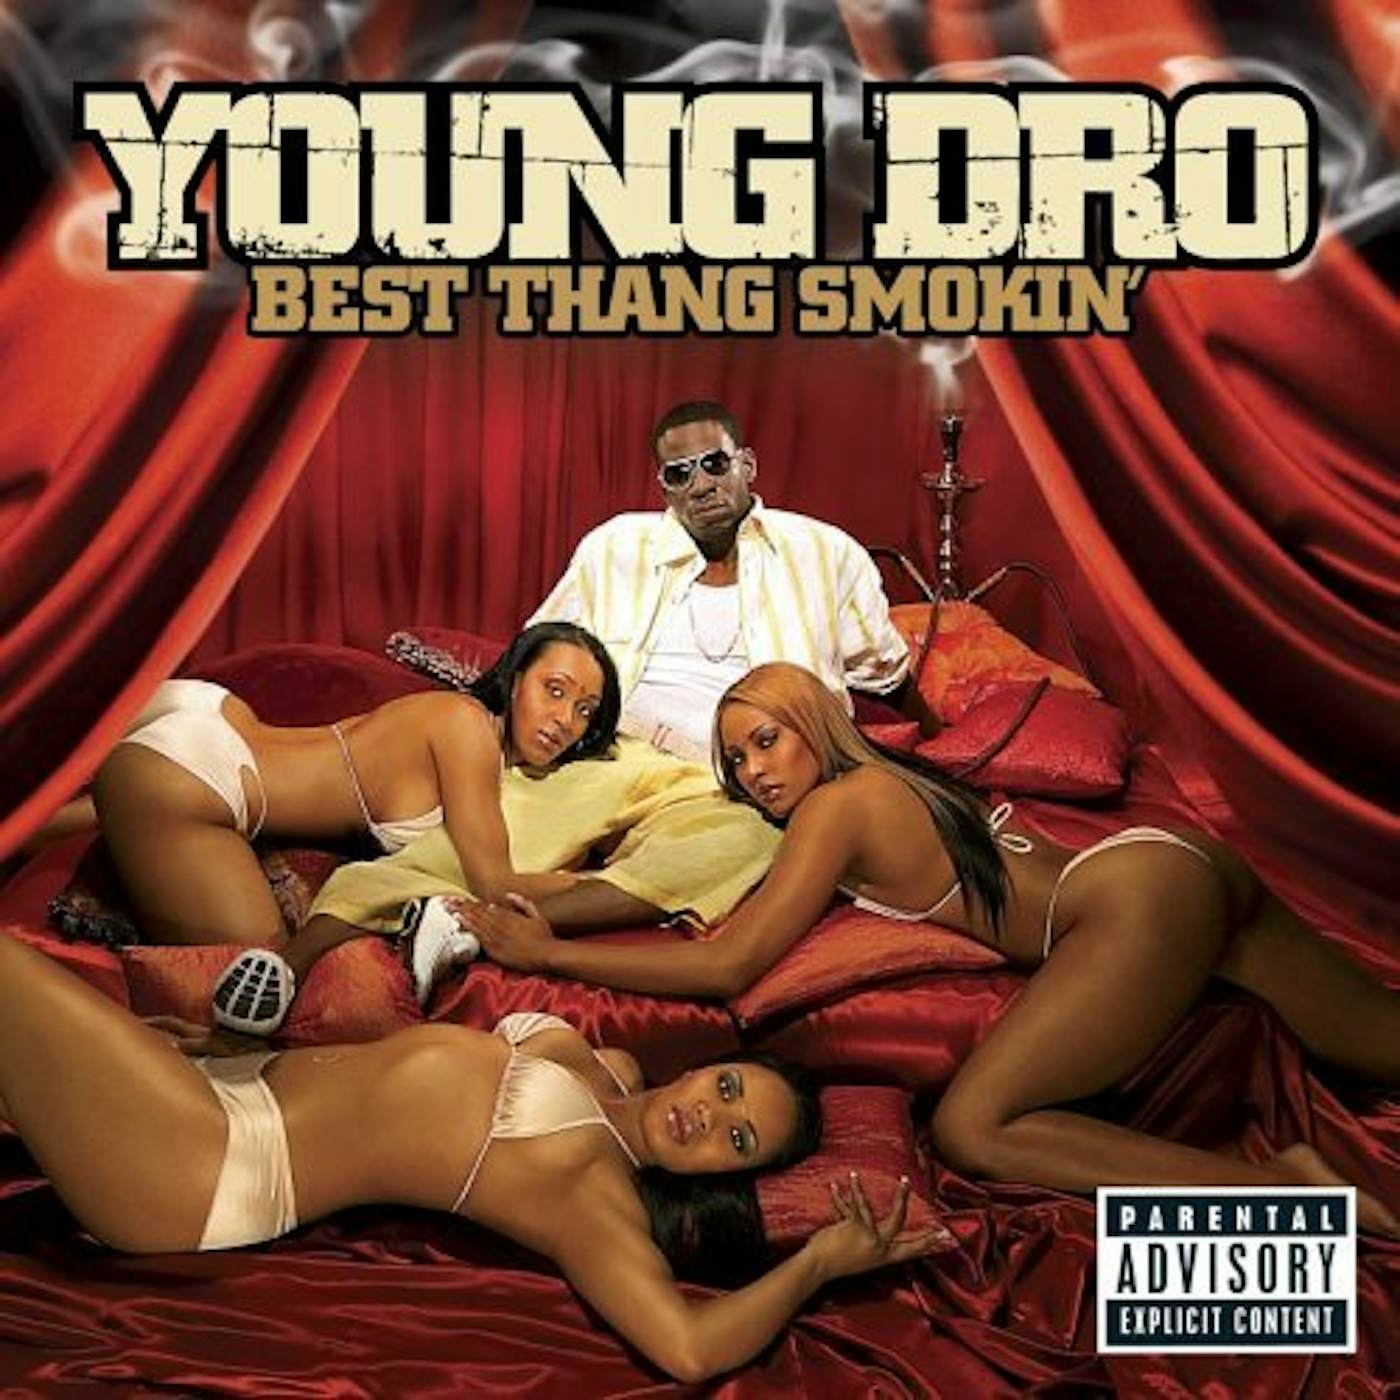 Young Dro BEST THANG SMOKIN CD